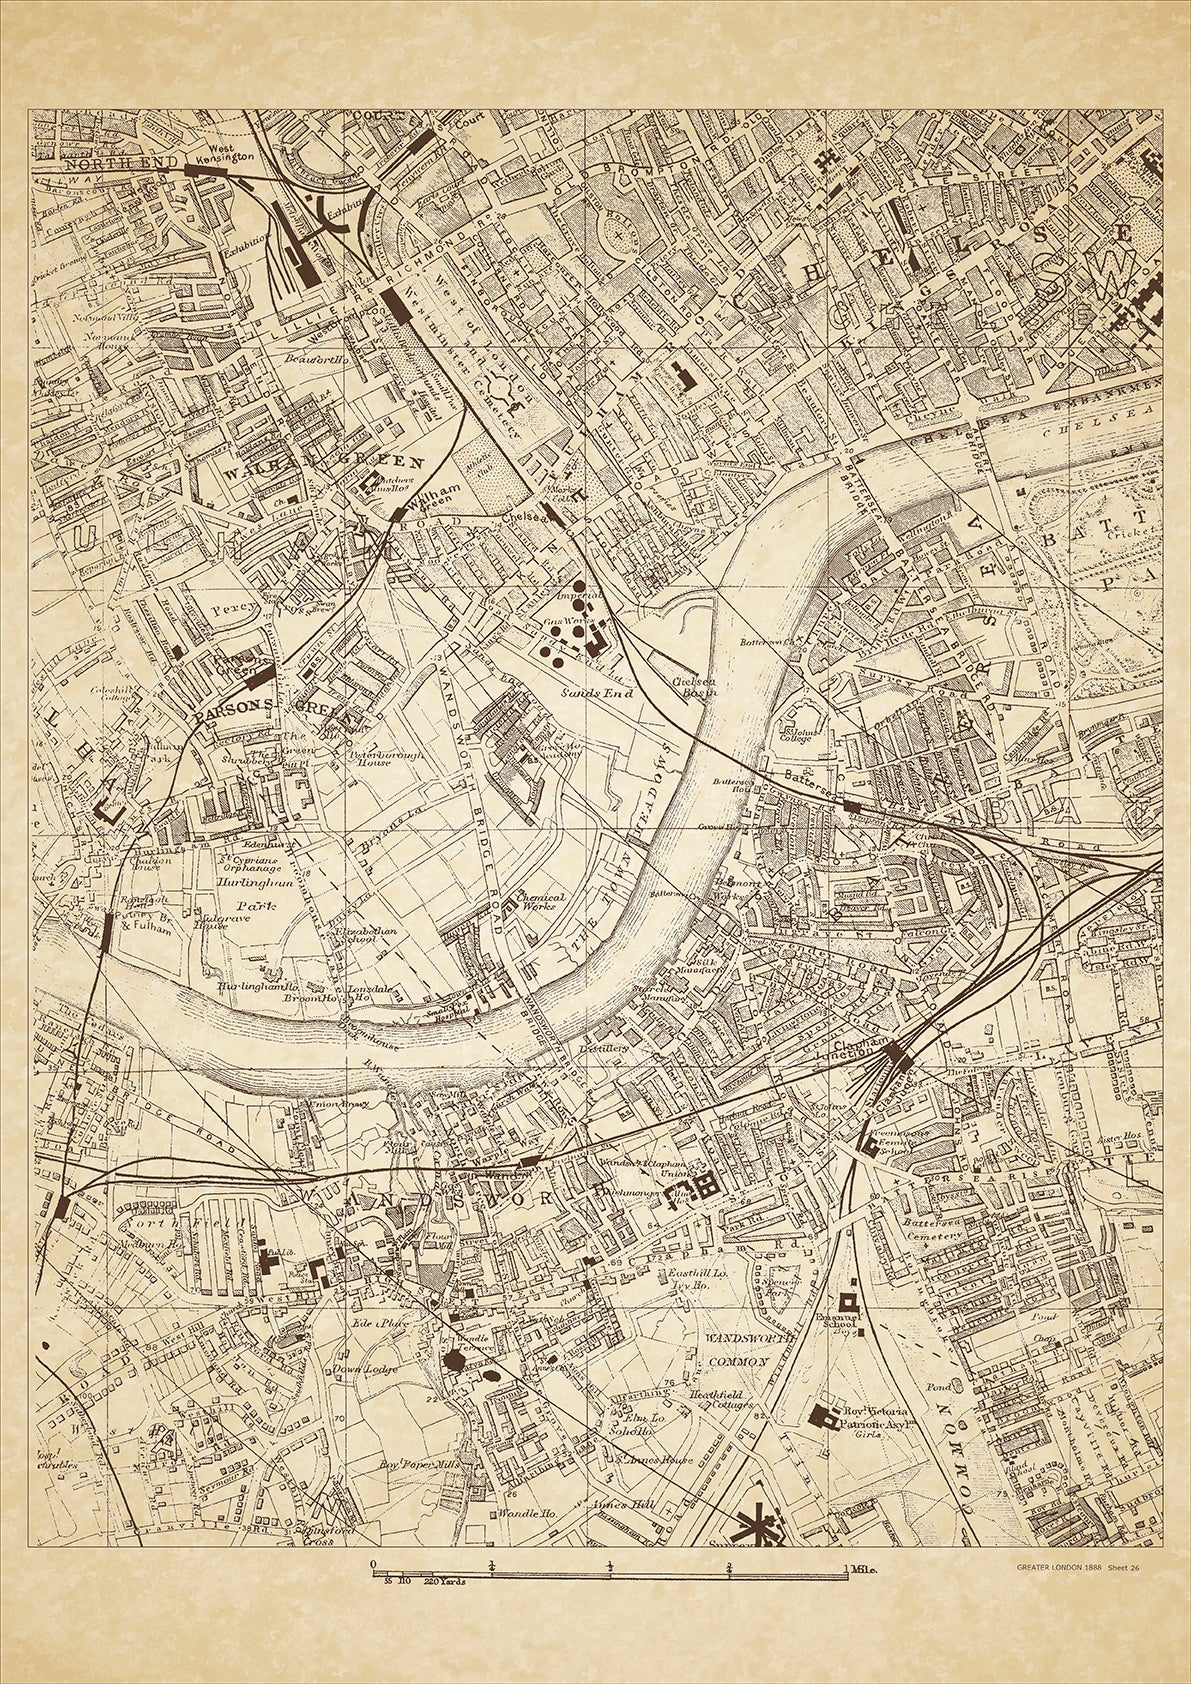 Greater London in 1888 Series - showing Wandsworth, Battersea (west), Chelsea (west), Parsons Green, Walham Green - sheet 26